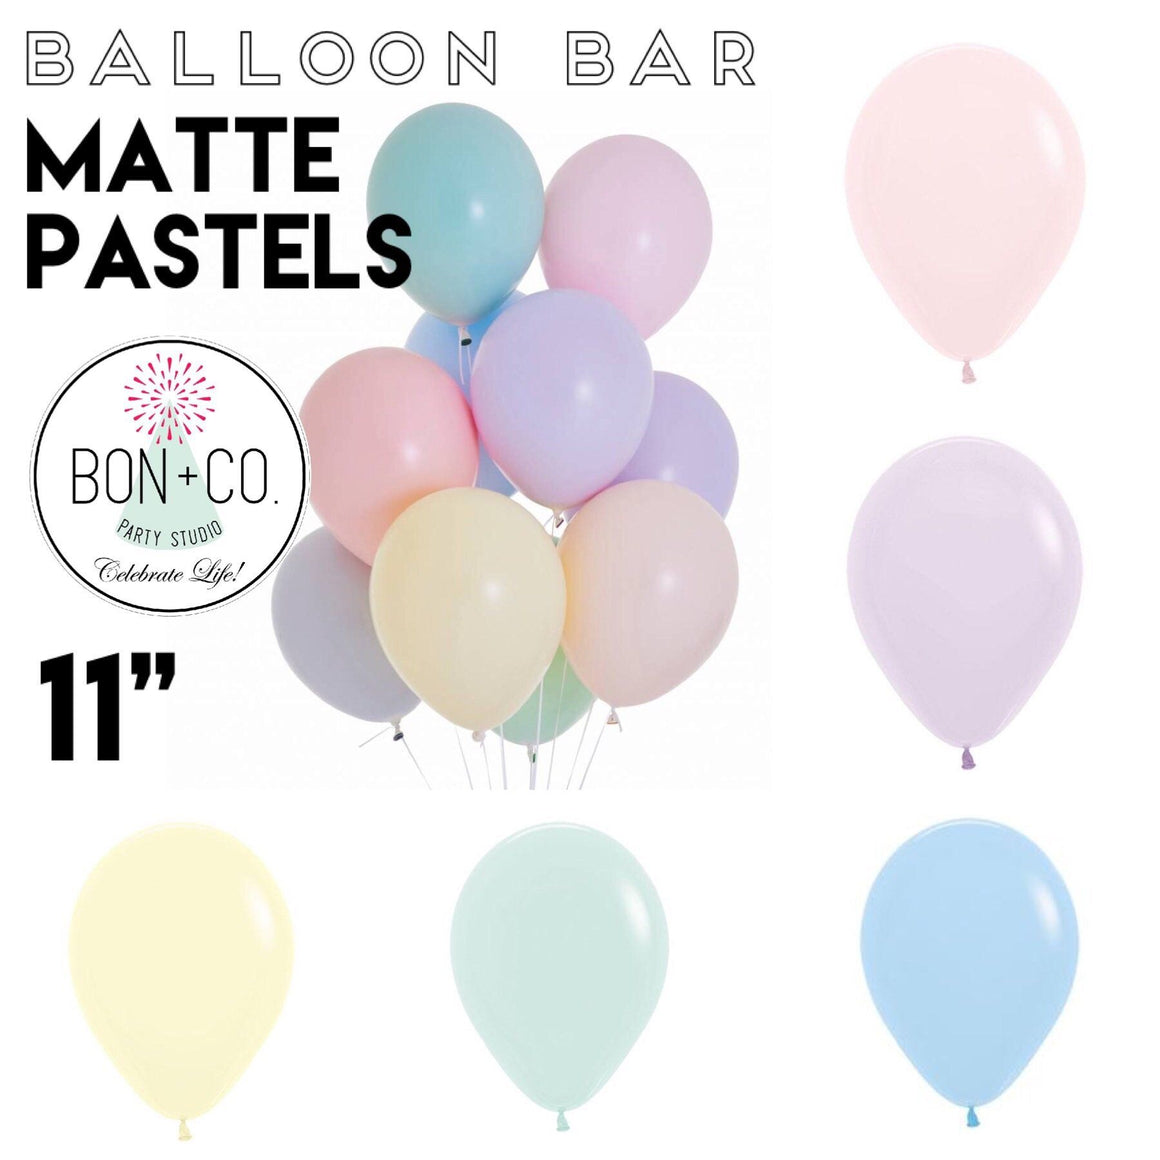 BALLOON BAR - MATTE PASTELS 11”, Balloons, Sempertex - Bon + Co. Party Studio